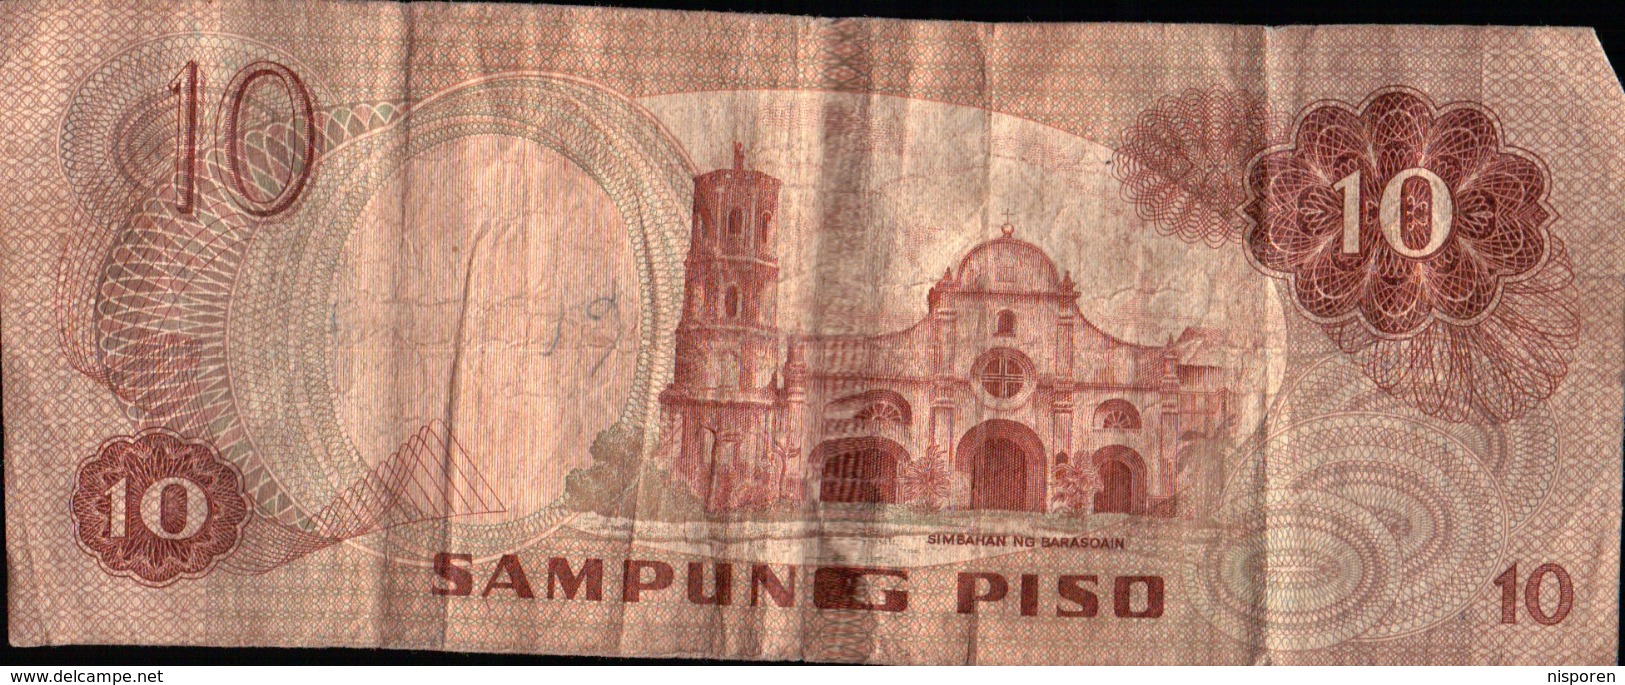 Philippines - Republika NG Pilipinas  -10 Piso - Sampung Piso - (Apolinario Mabini ) - Philippines